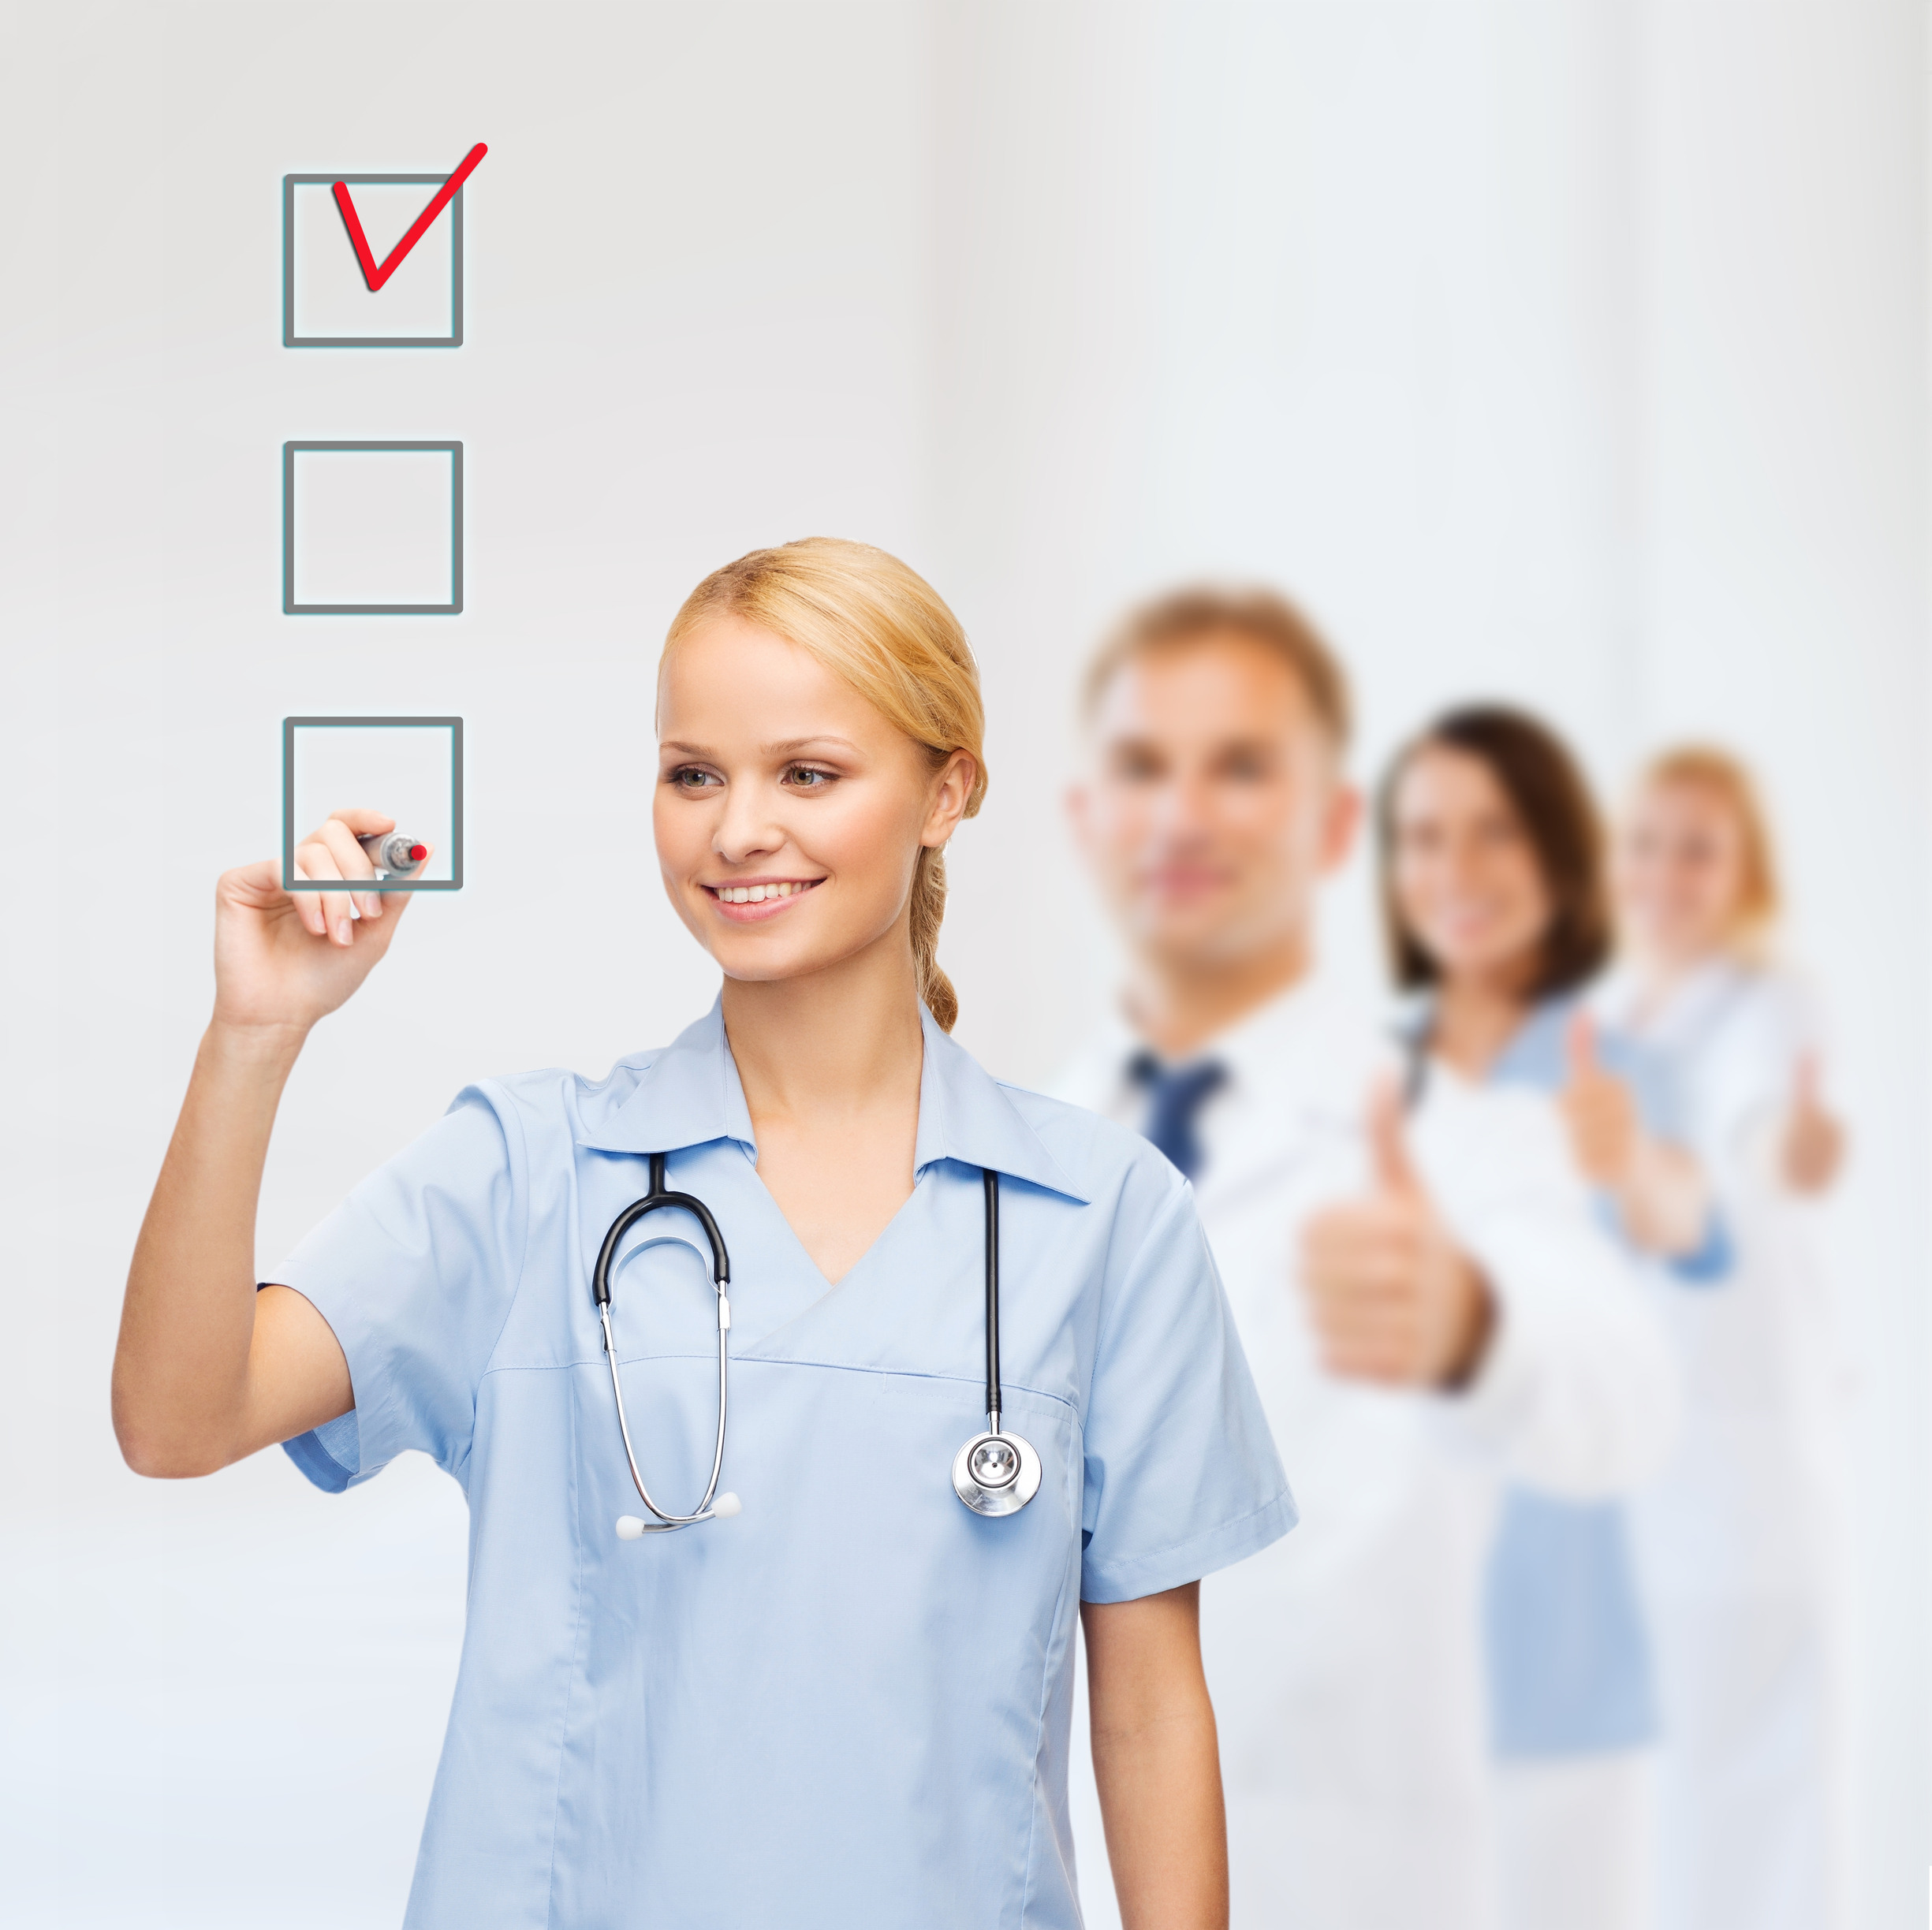 doctor or nurse drawing checkmark into checkbox